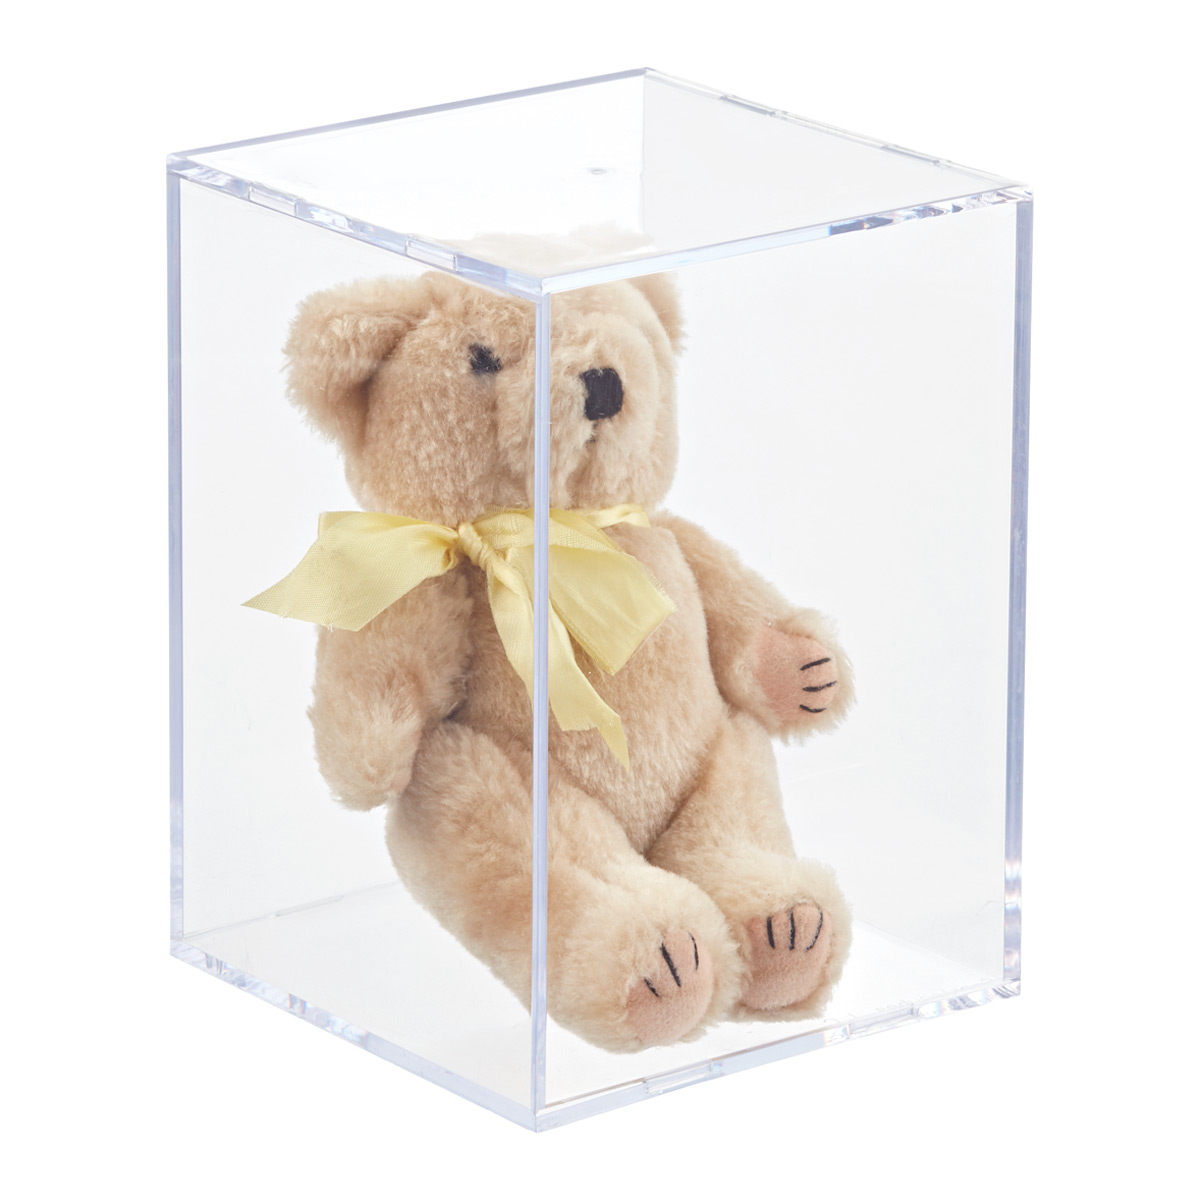 Ballqube Plush Toy Display Cube | The 